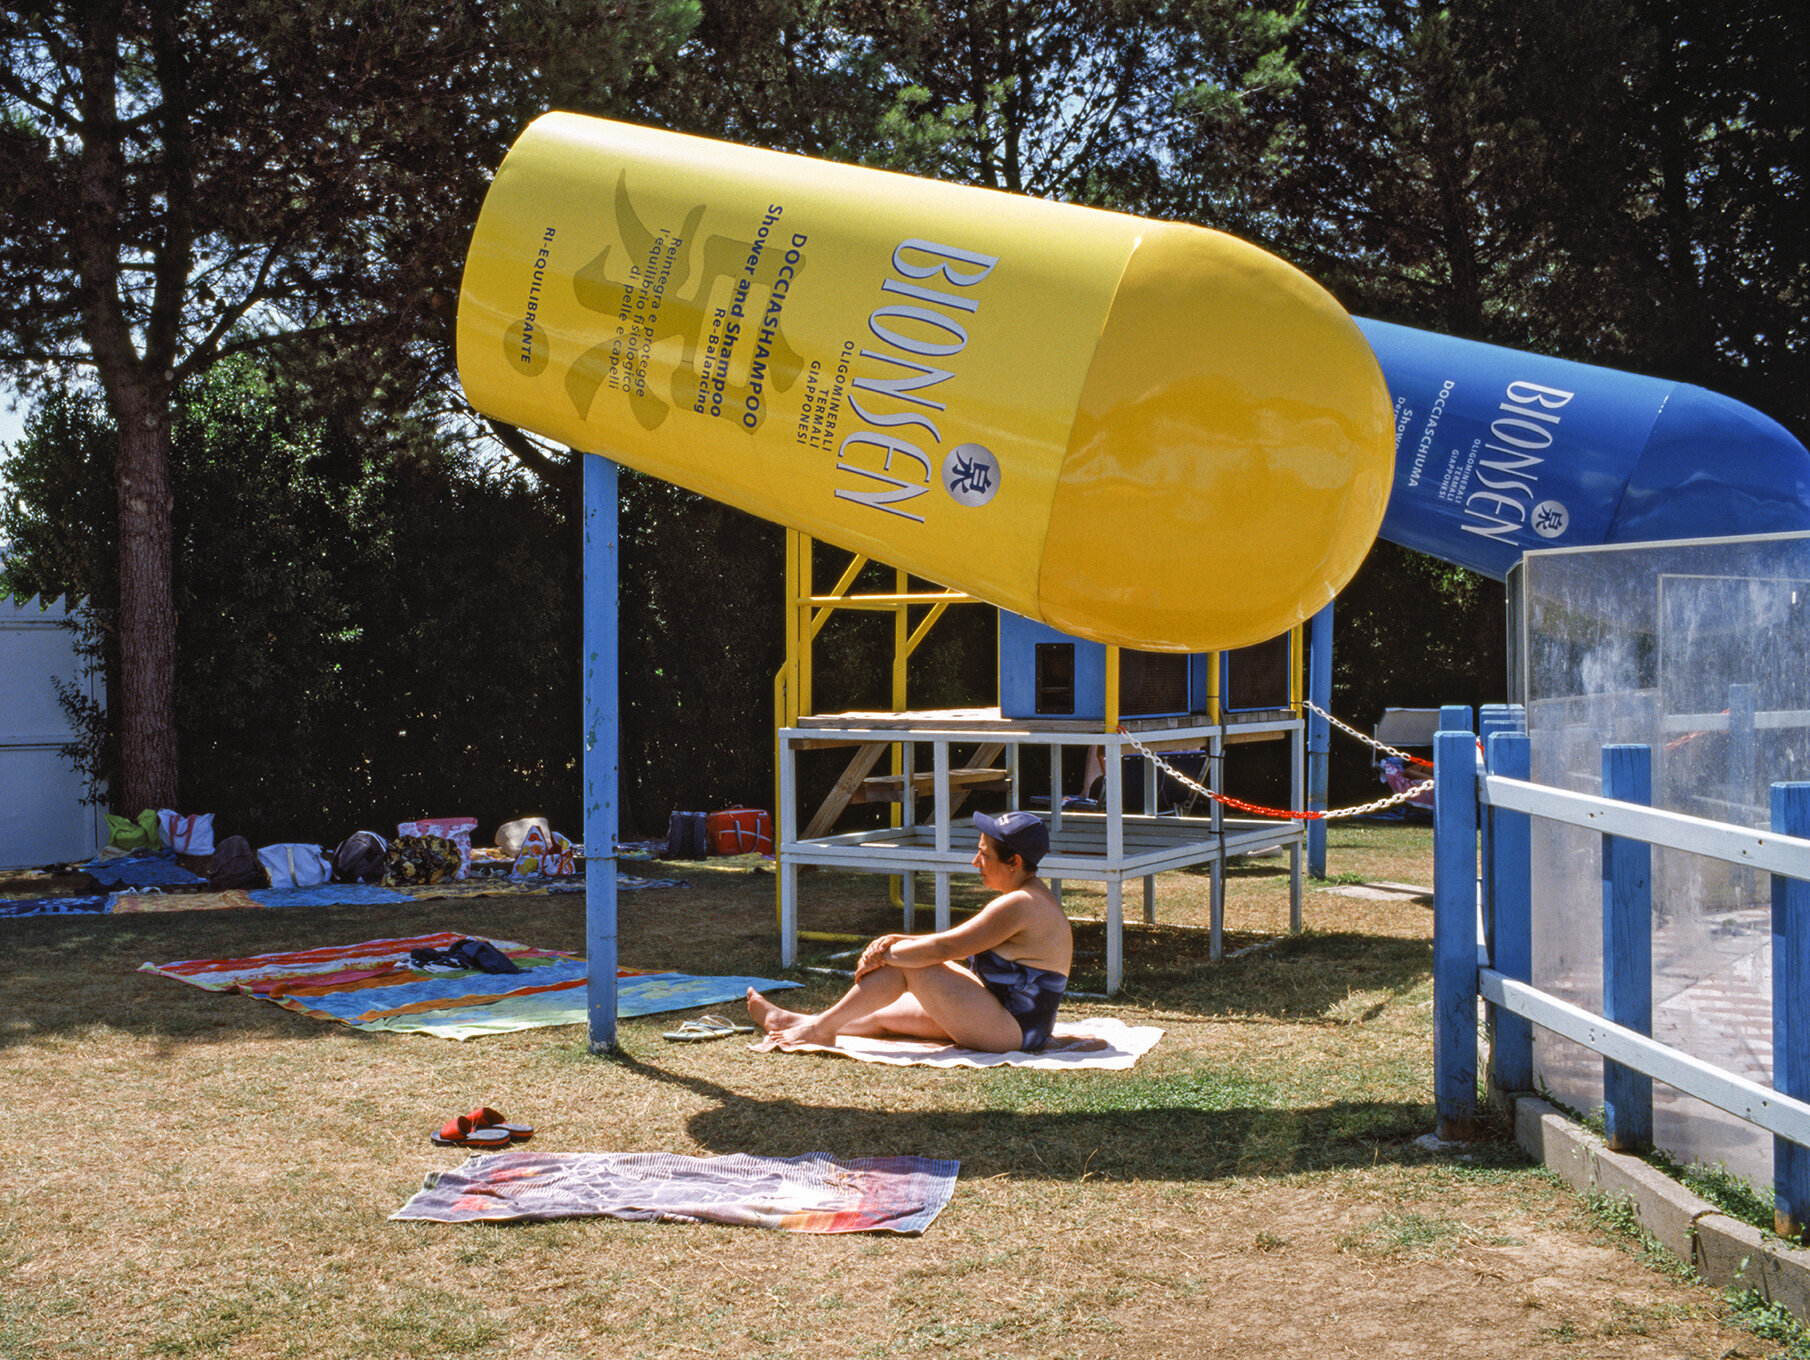   Blessed solitude,  water amusement park,  Riccione, 2008  